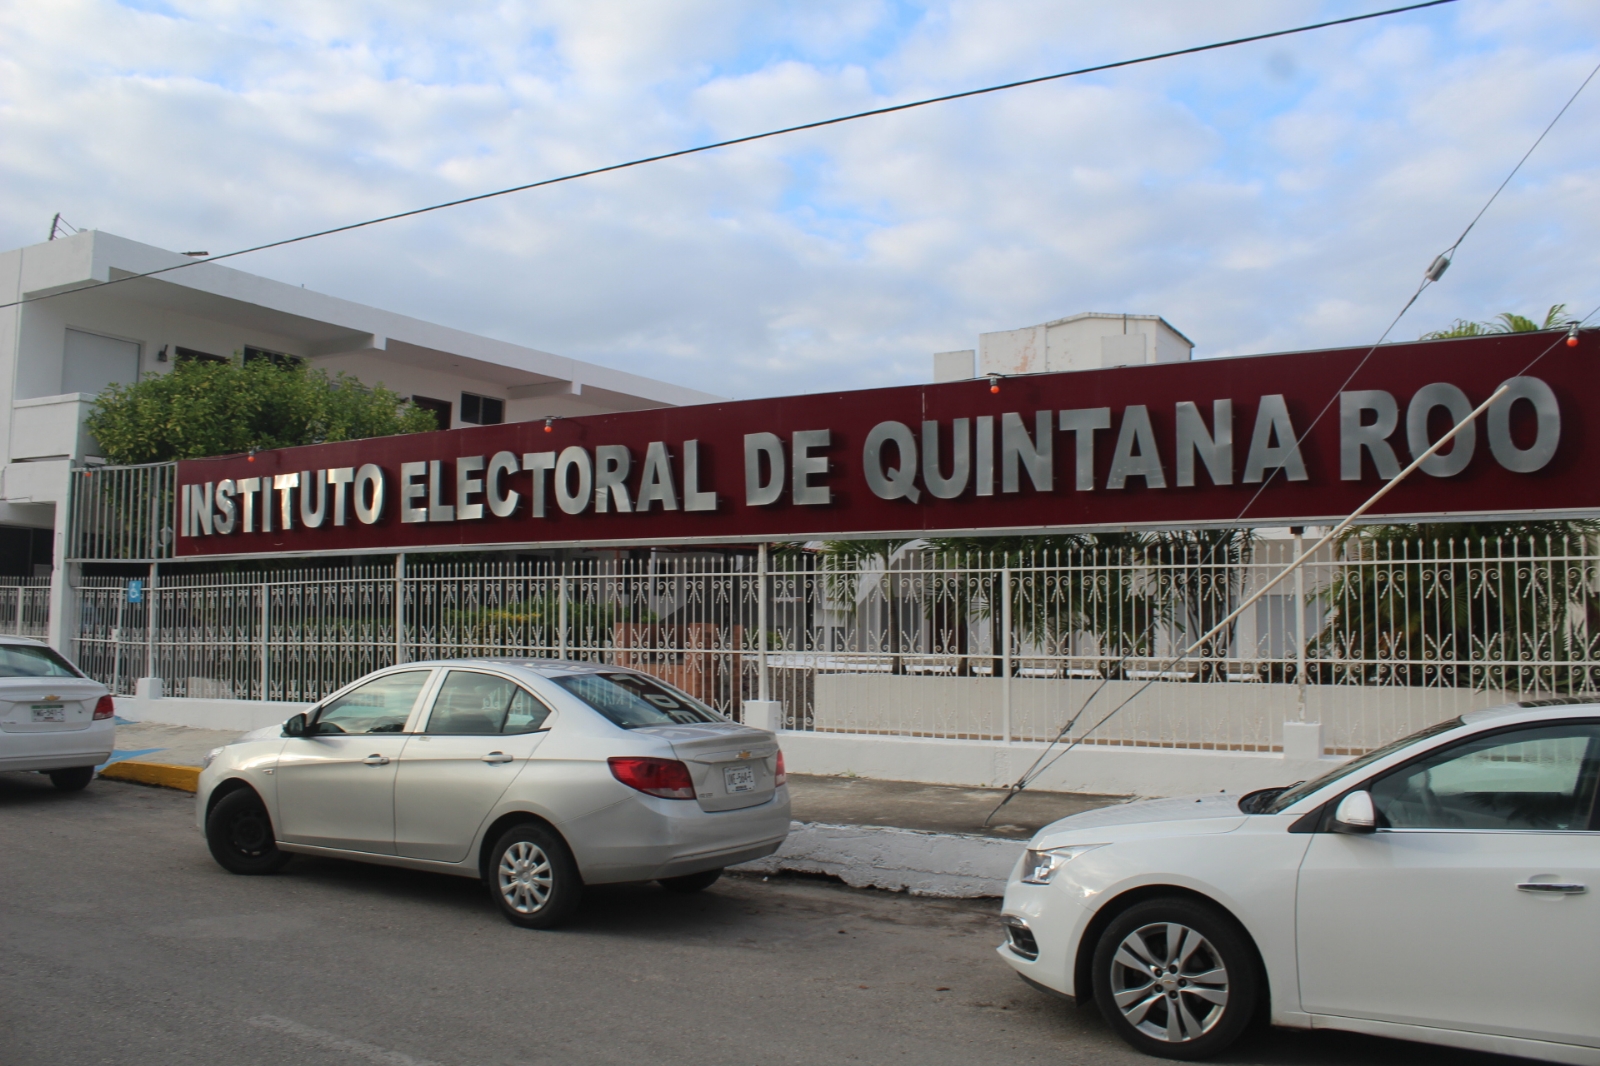 Según Ieqroo, se usarán para llevar material electoral a los municipios